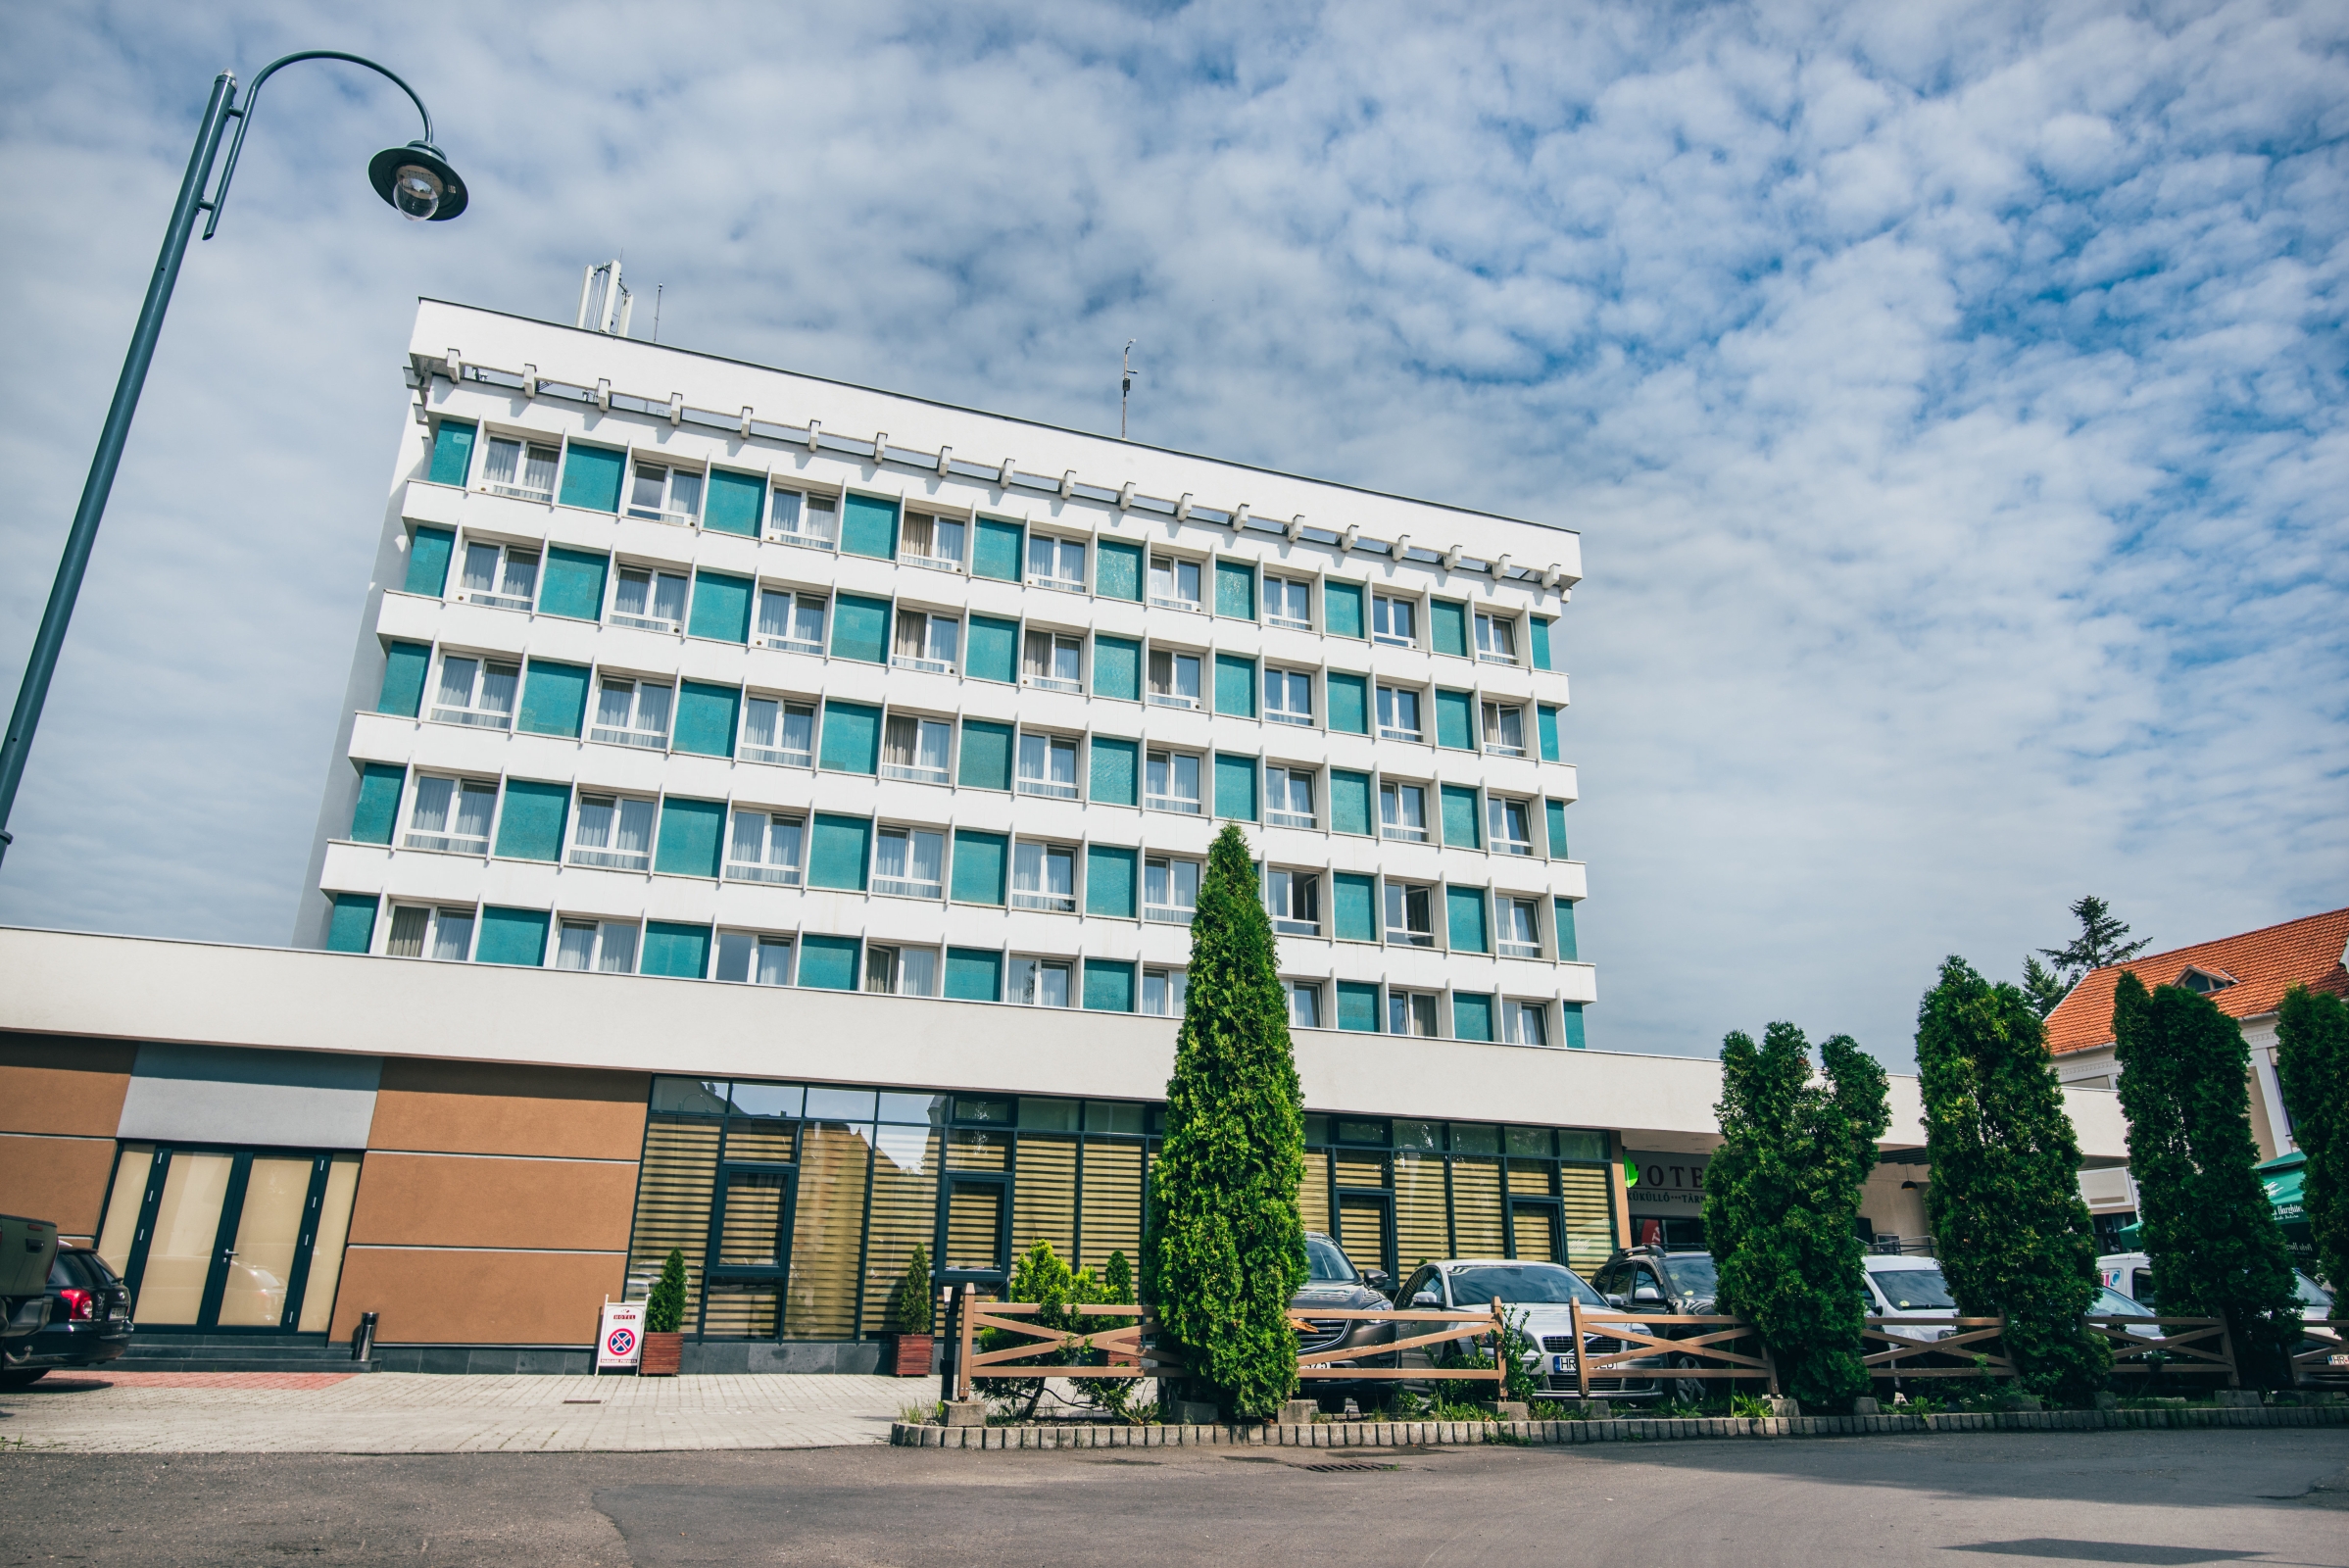 Hotel Târnava-Küküllő - 3 HRS star hotel in Odorheiu-Secuiesc